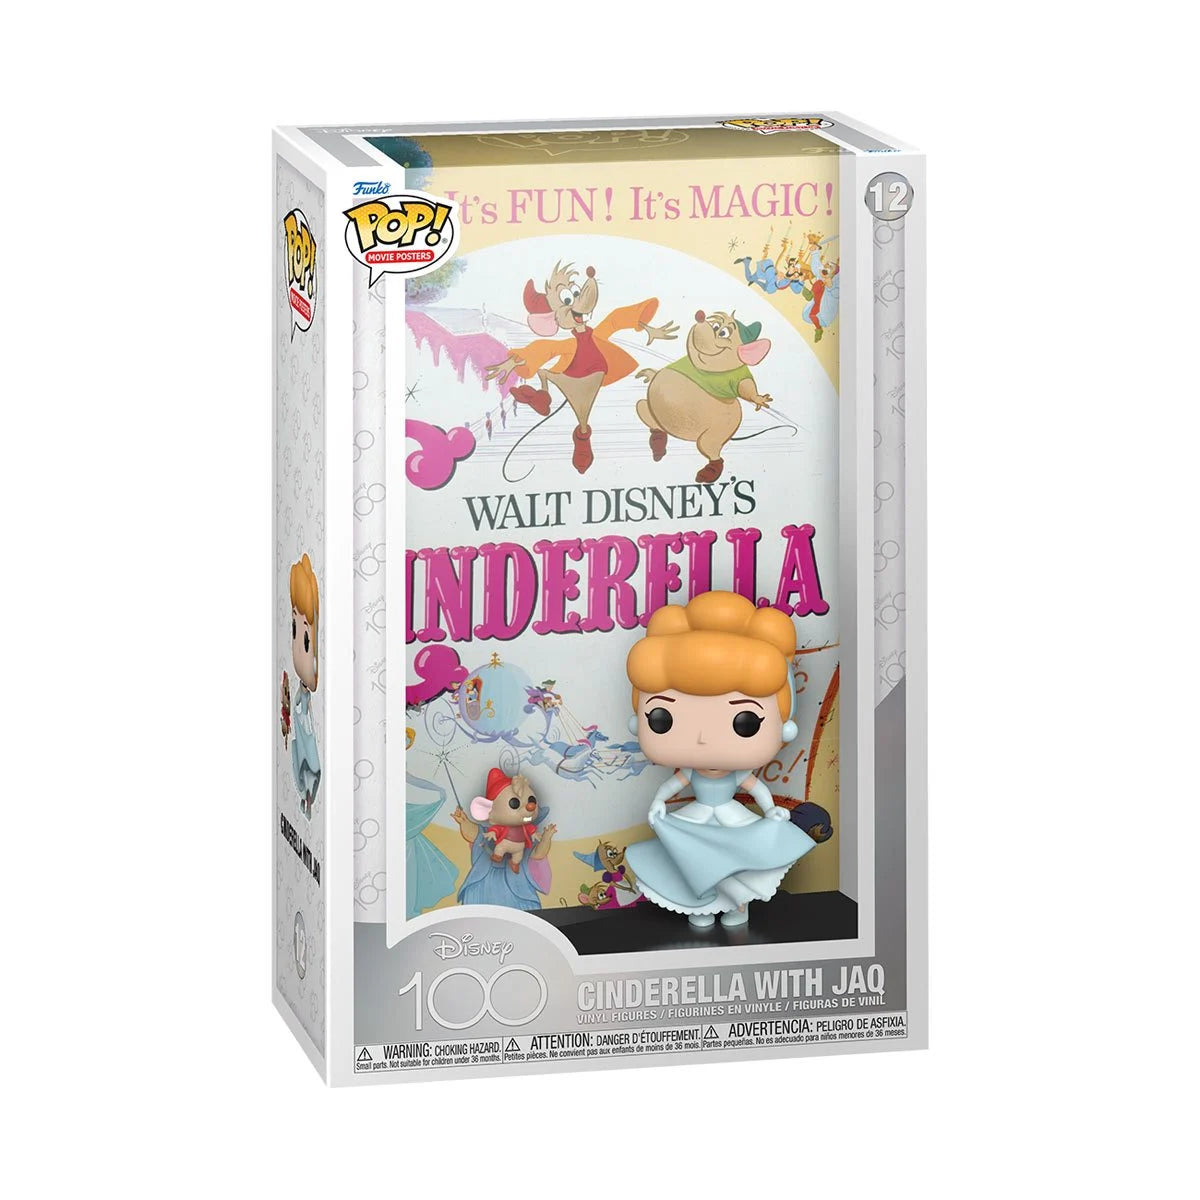 Cinderella with Jaq Disney 100 Funko Pop! Movie Poster with Case